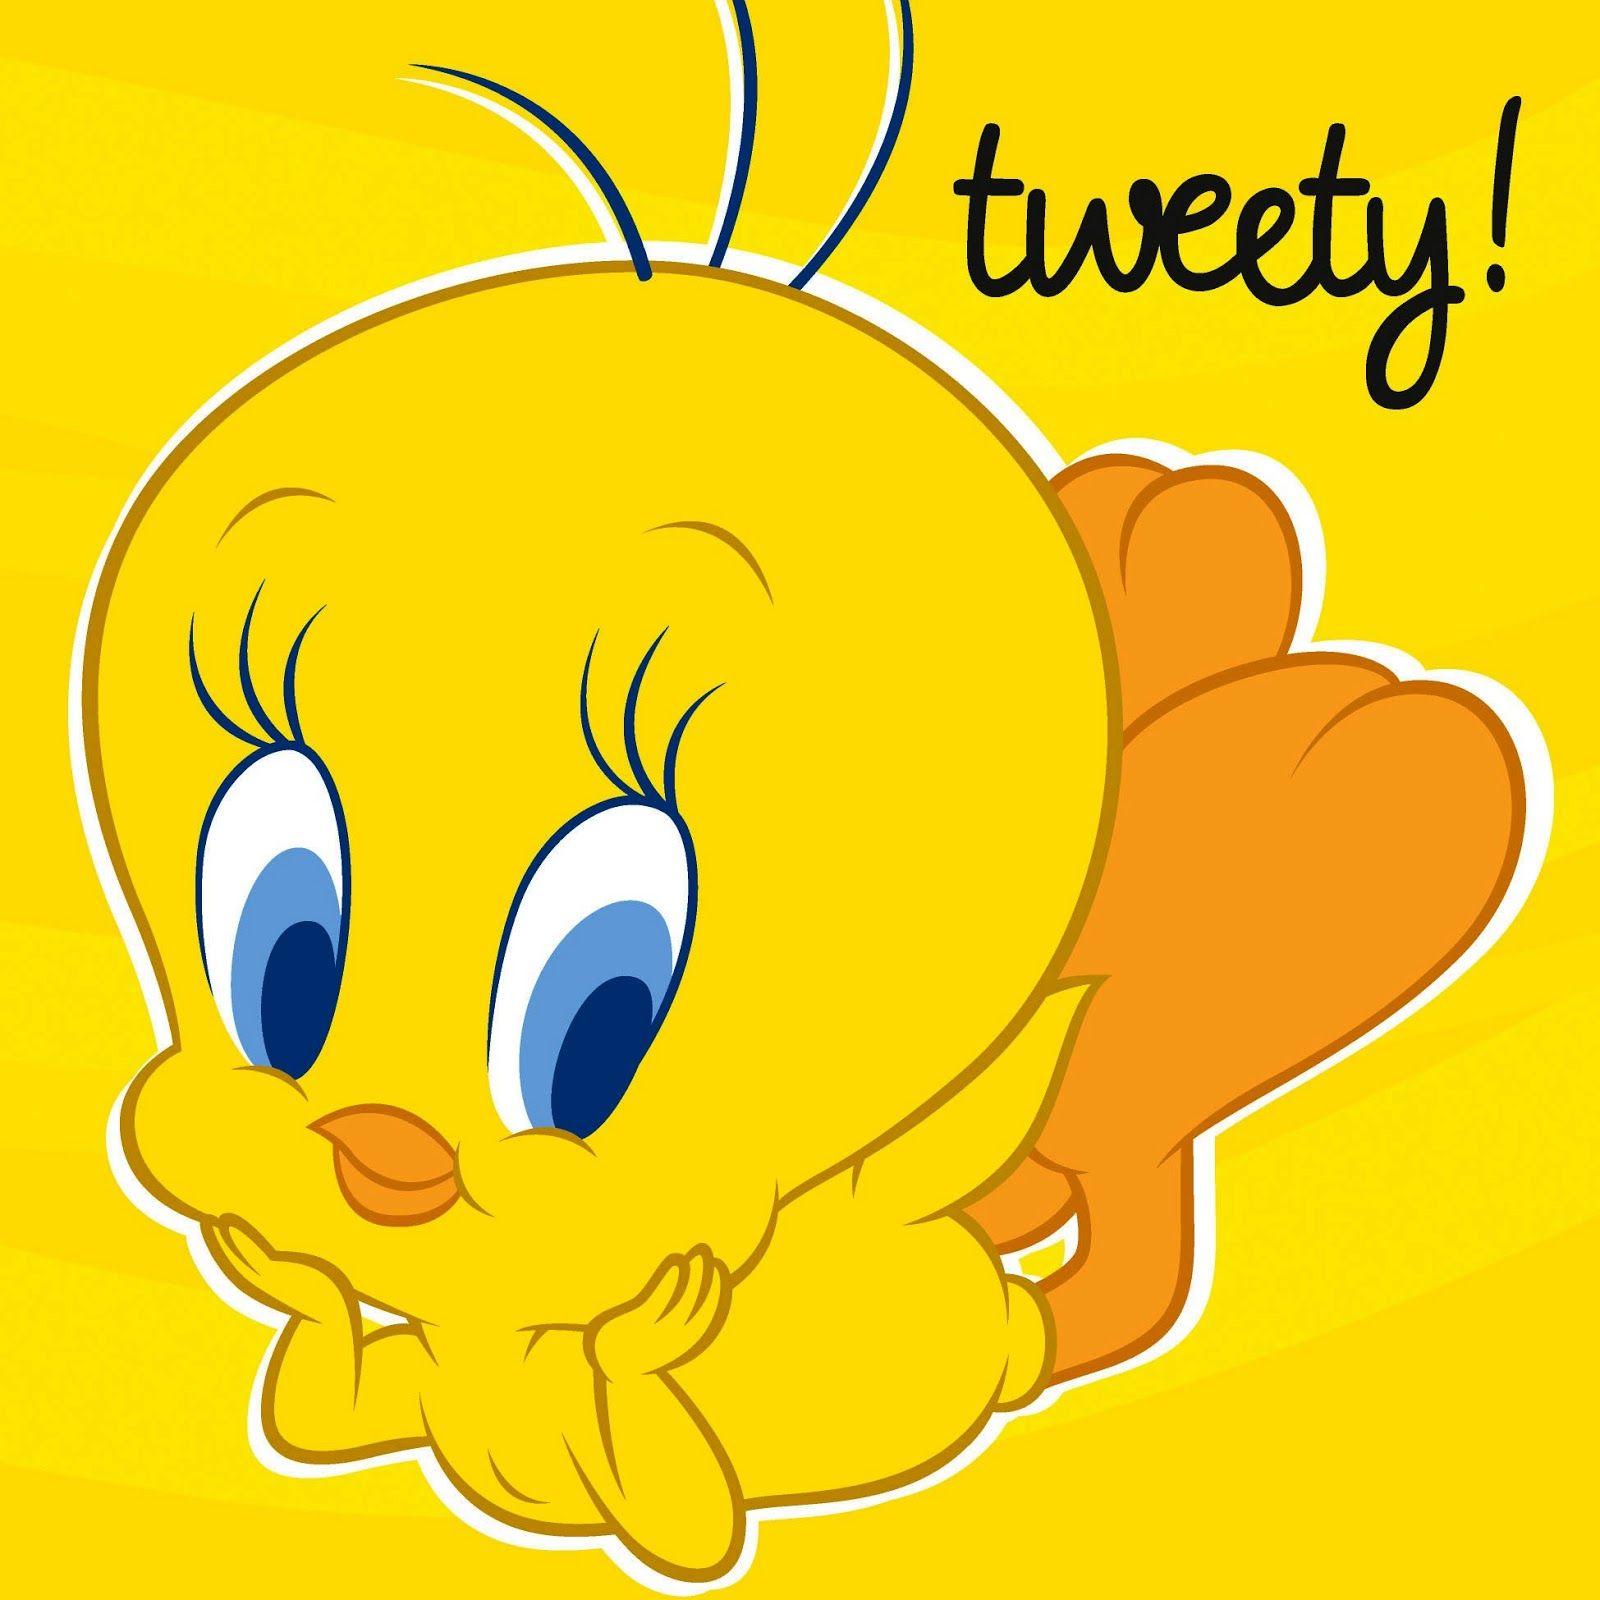 Trending Search:tweety wallpaper, Tweety, cute tweety wallpaper 3D